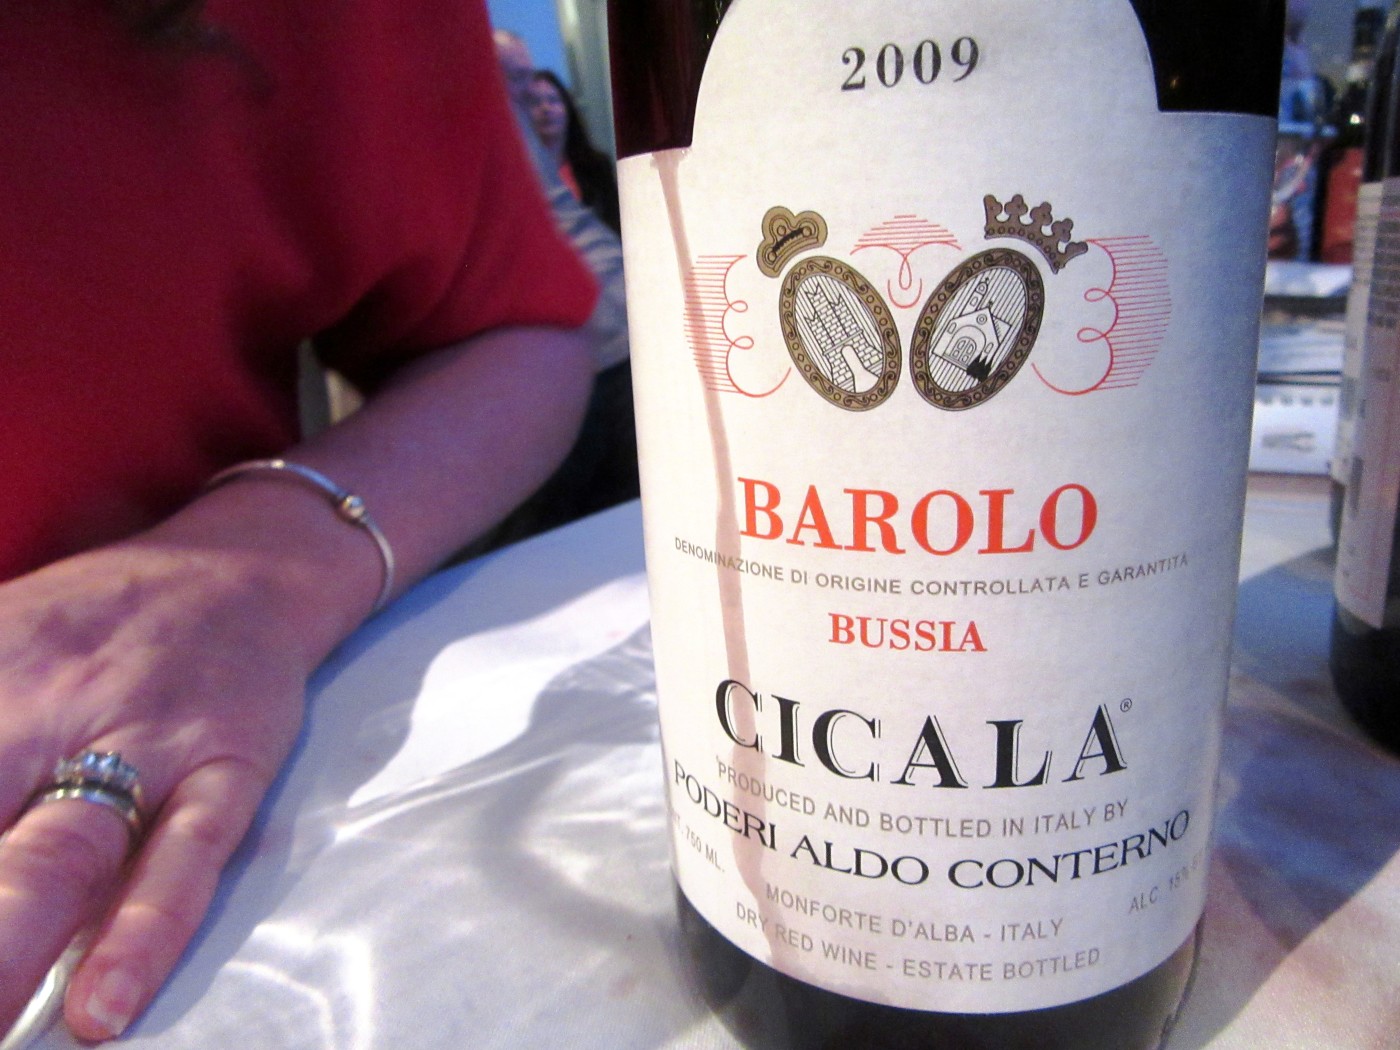 Poderi Aldo Conterno, Barolo Cicala 2009, Piedmont, Italy, Wine Casual